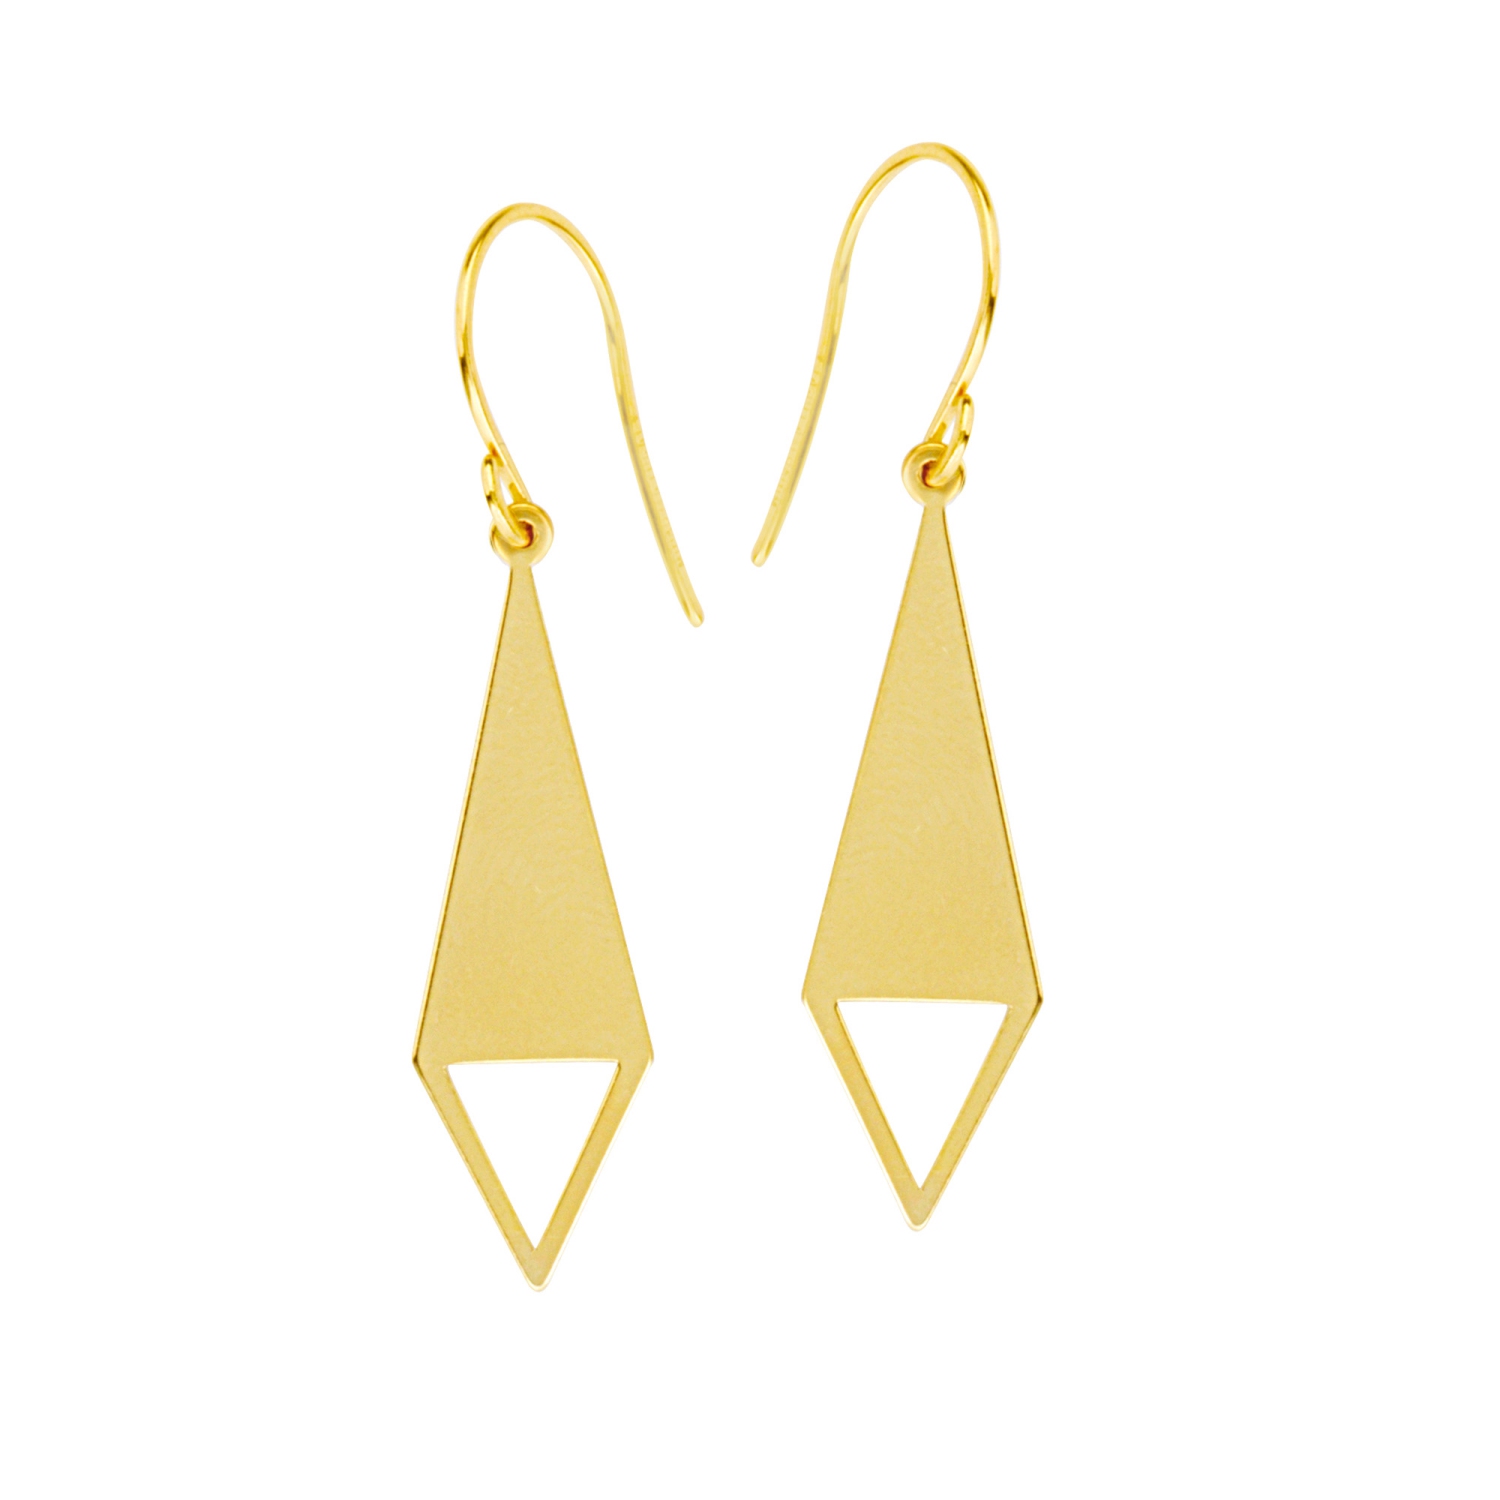 14K Yellow Gold Shiny Drop Triangle Earrings